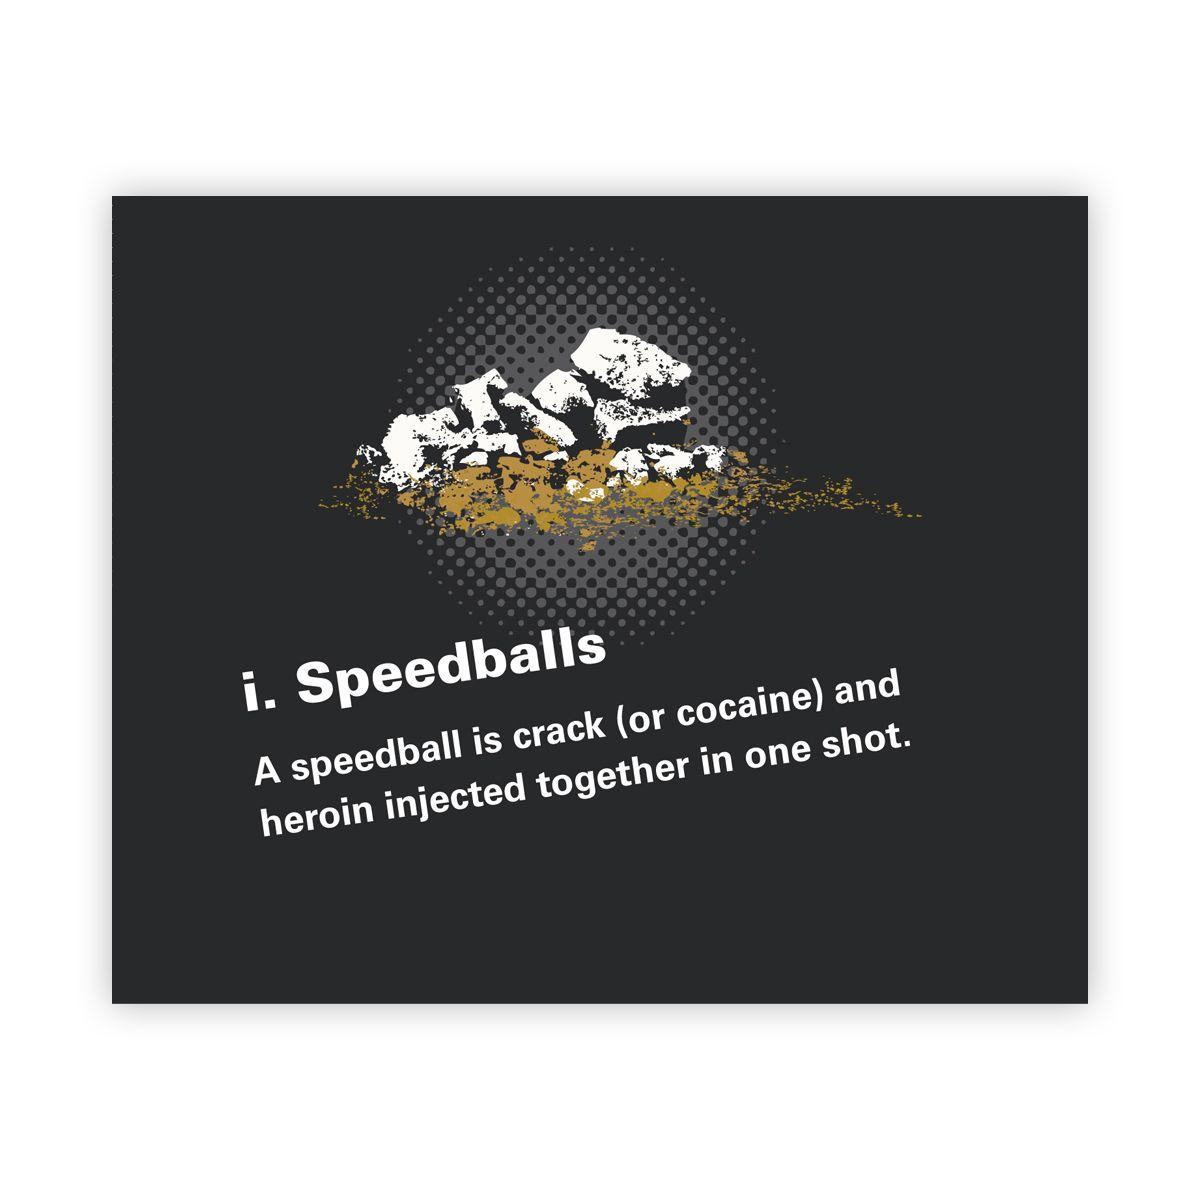 Speedball Logo - Speedballs - injecting heroin and cocaine